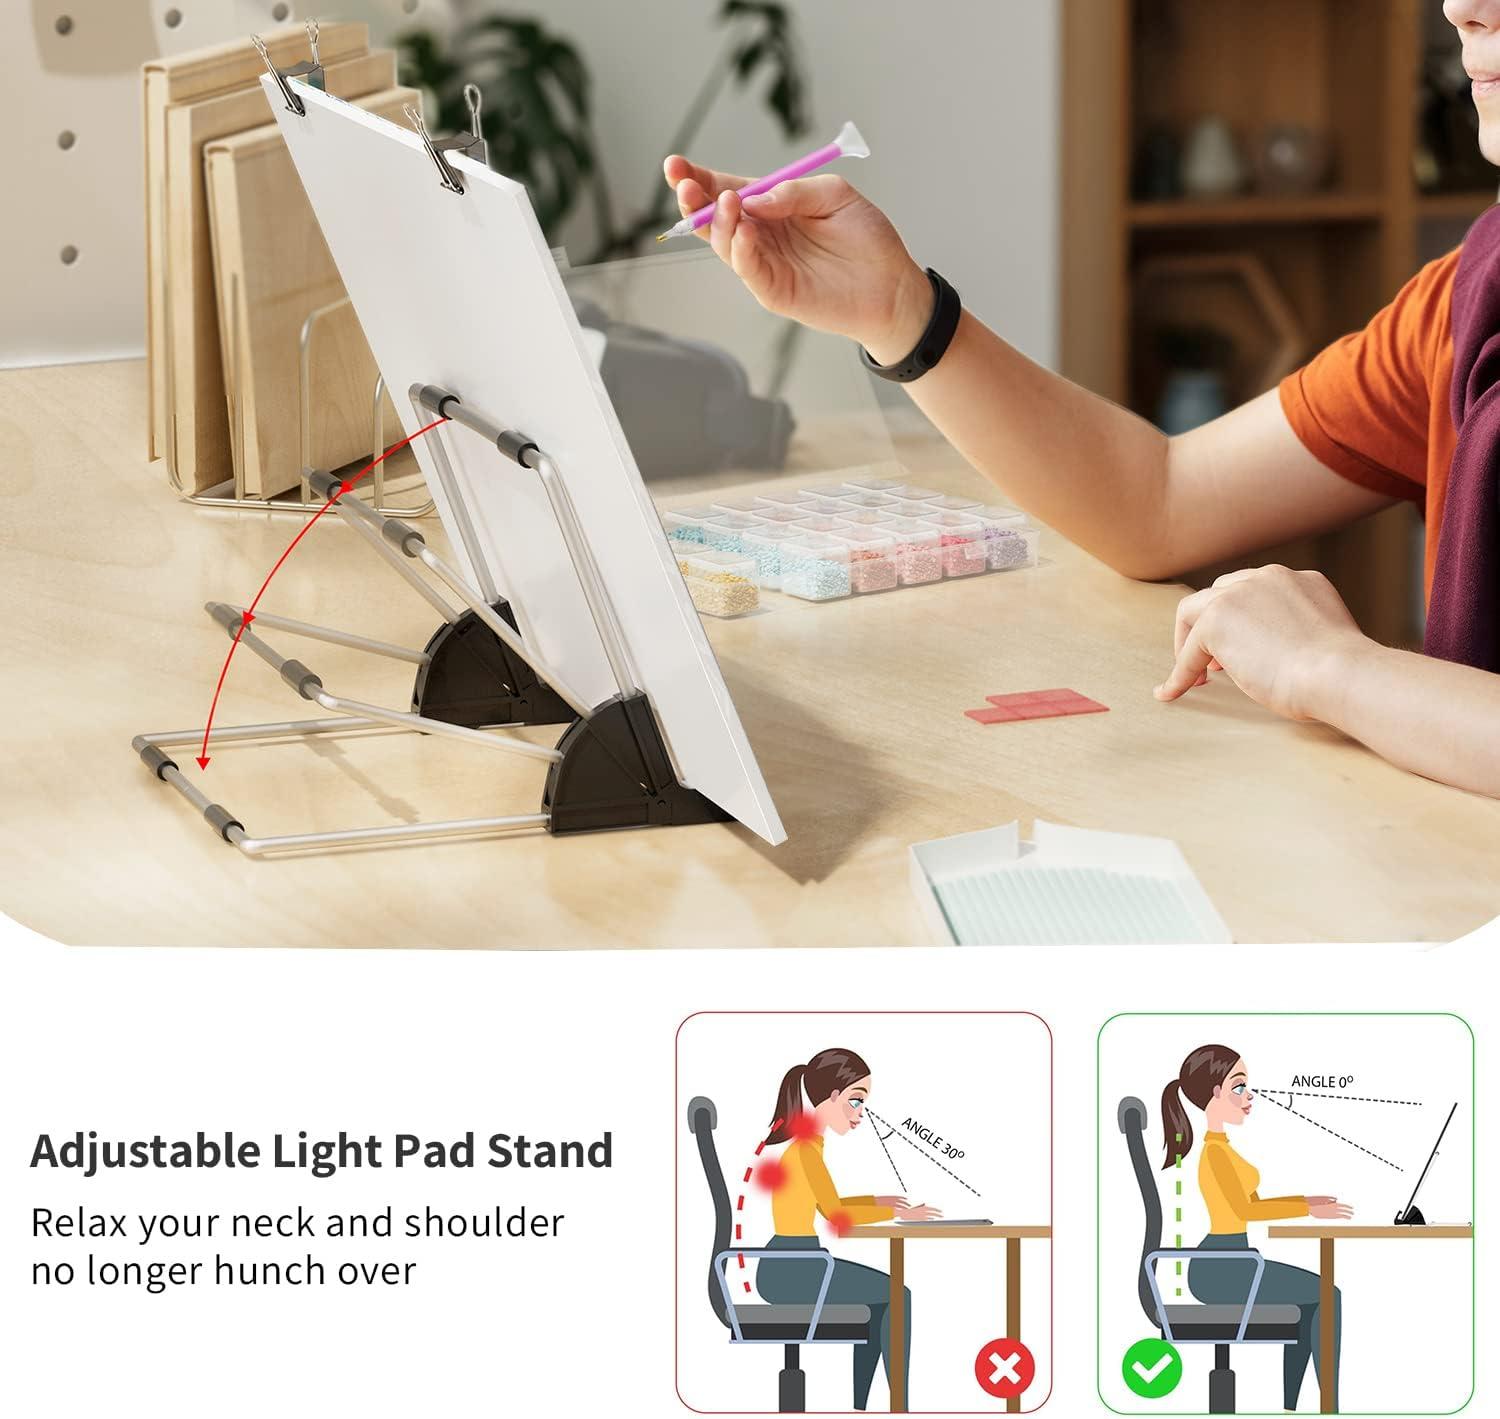 ARTDOT A4 LED Light Board for Diamond Painting Kits USB Powered